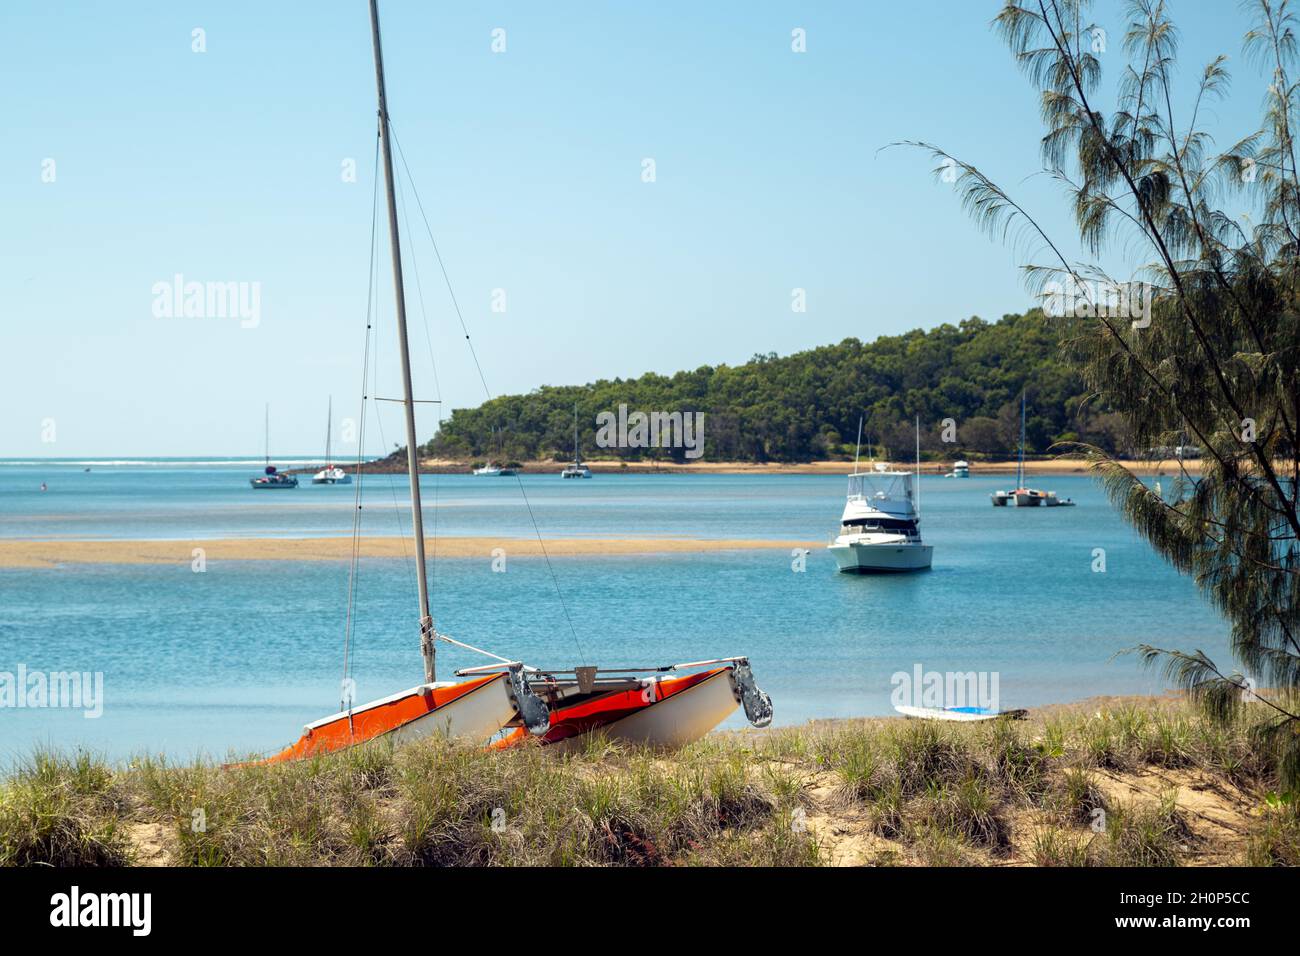 Un catamarán en reposo en dunas de arena. Foto de stock